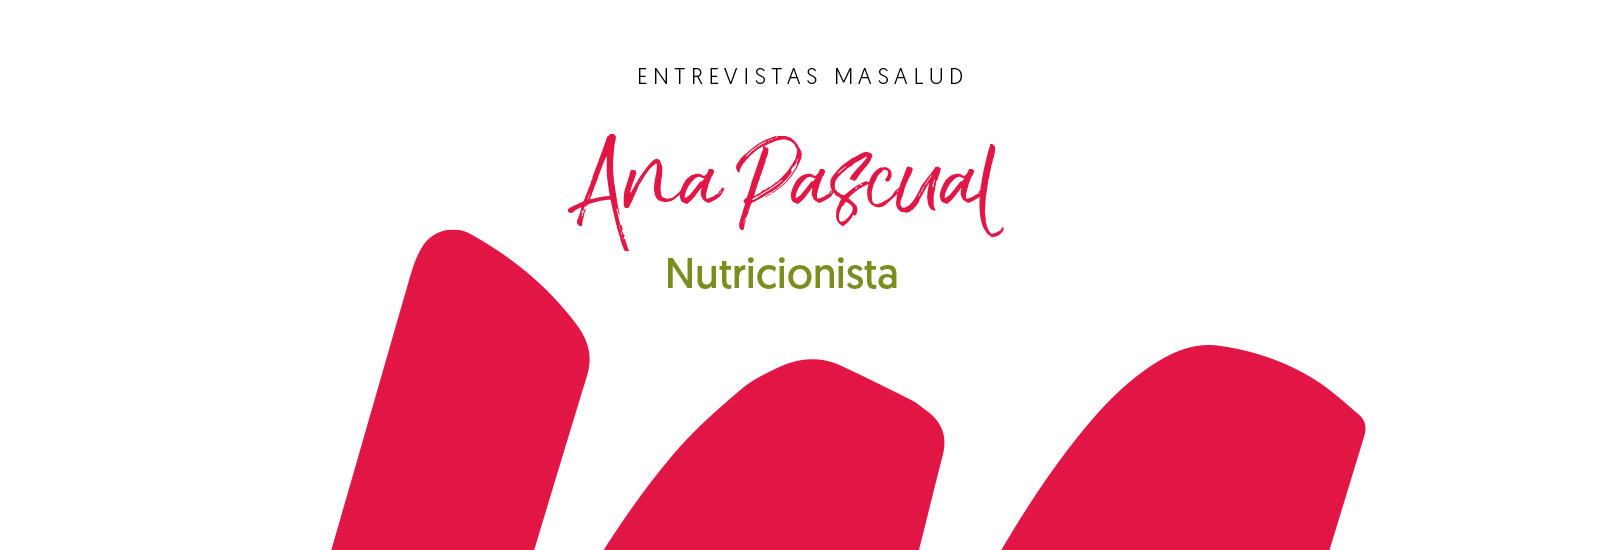 Ana Pascual  Nutricionista